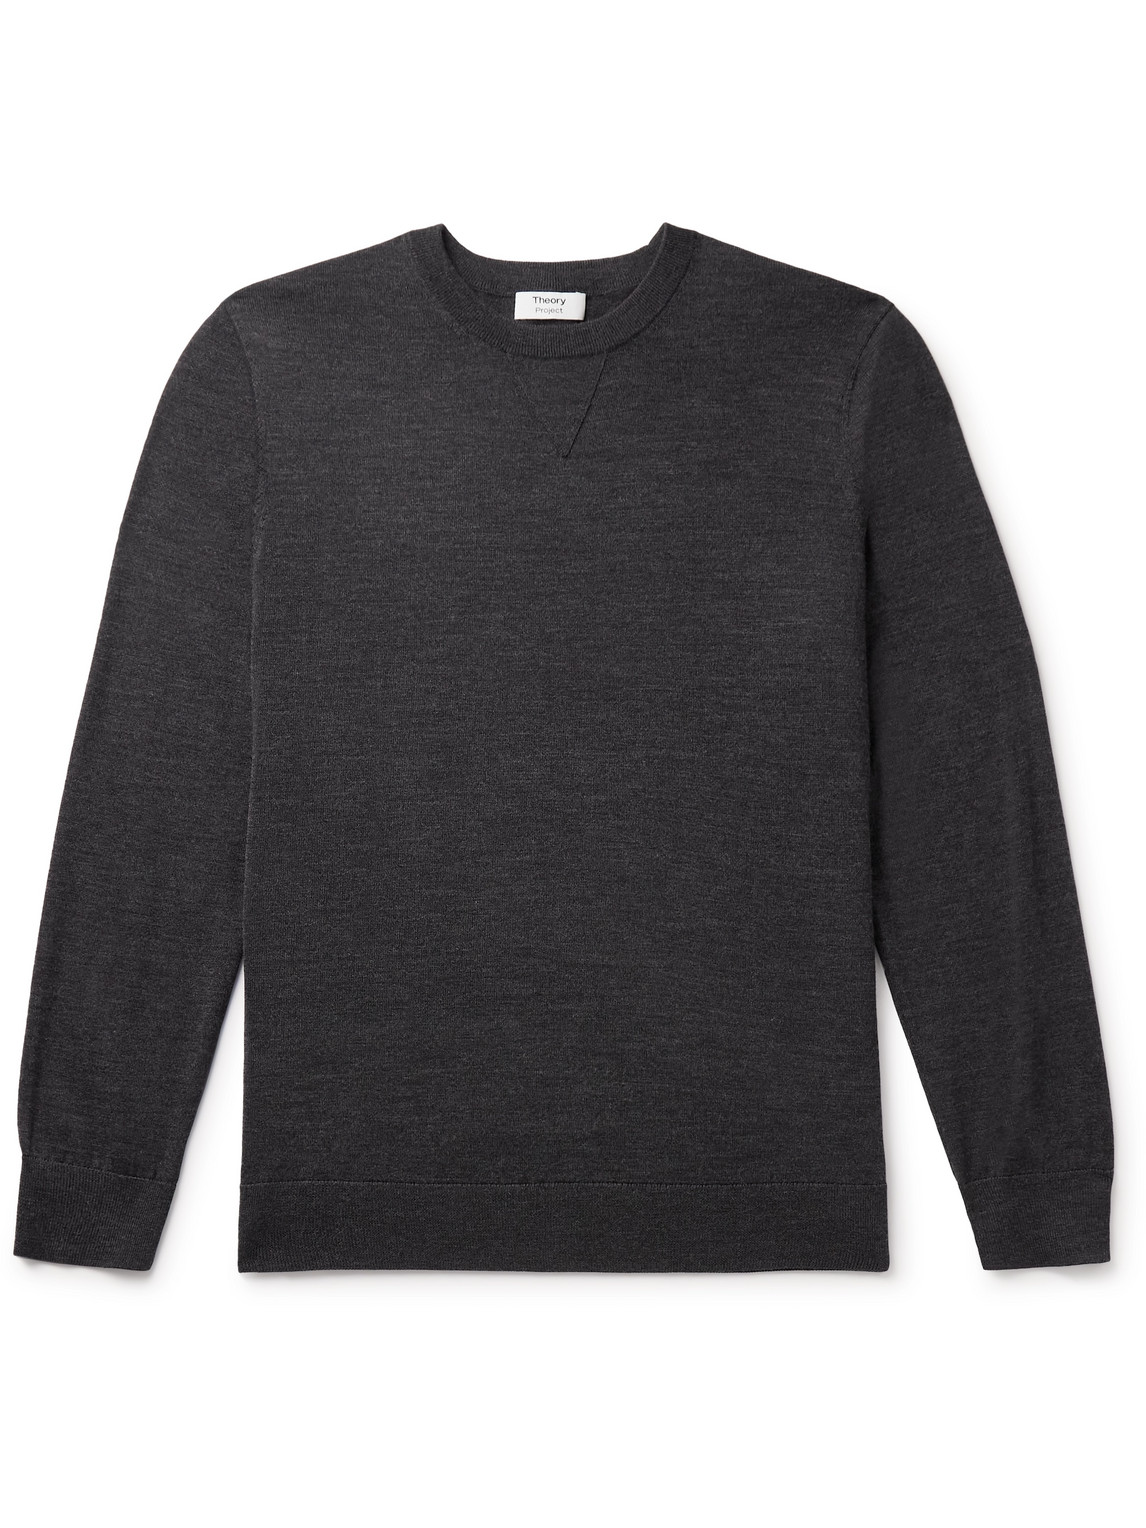 Theory - Lucas Ossendrijver Shell-Trimmed Merino Wool-Blend Sweater - Men - Black - XL von Theory